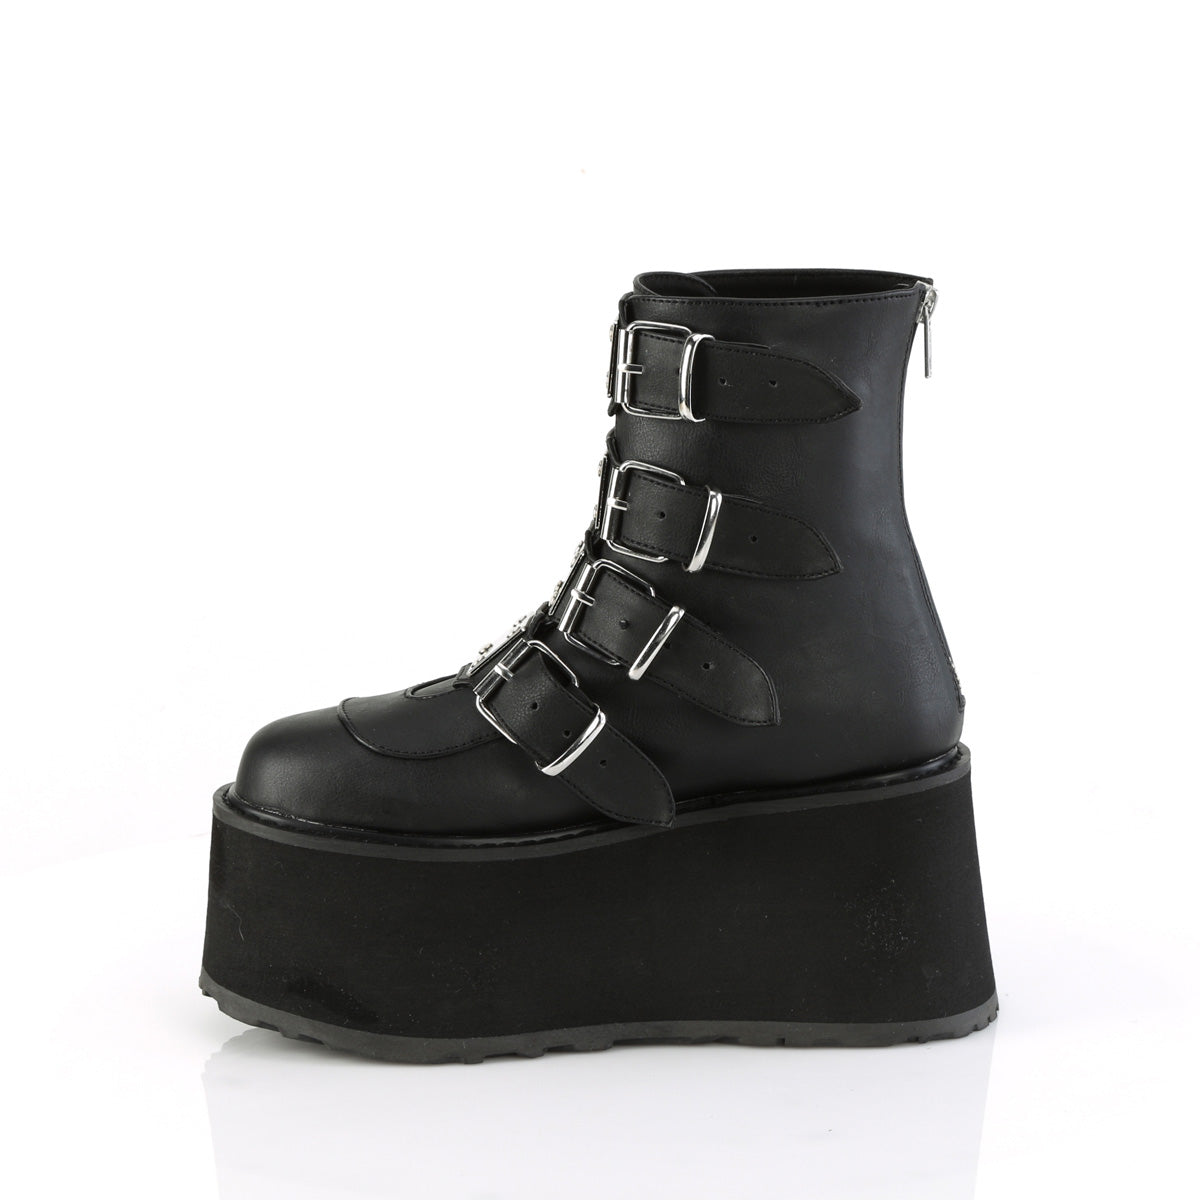 DAMNED-105 Demonia Black Vegan Leather Women's Ankle Boots [Demonia Cult Alternative Footwear]